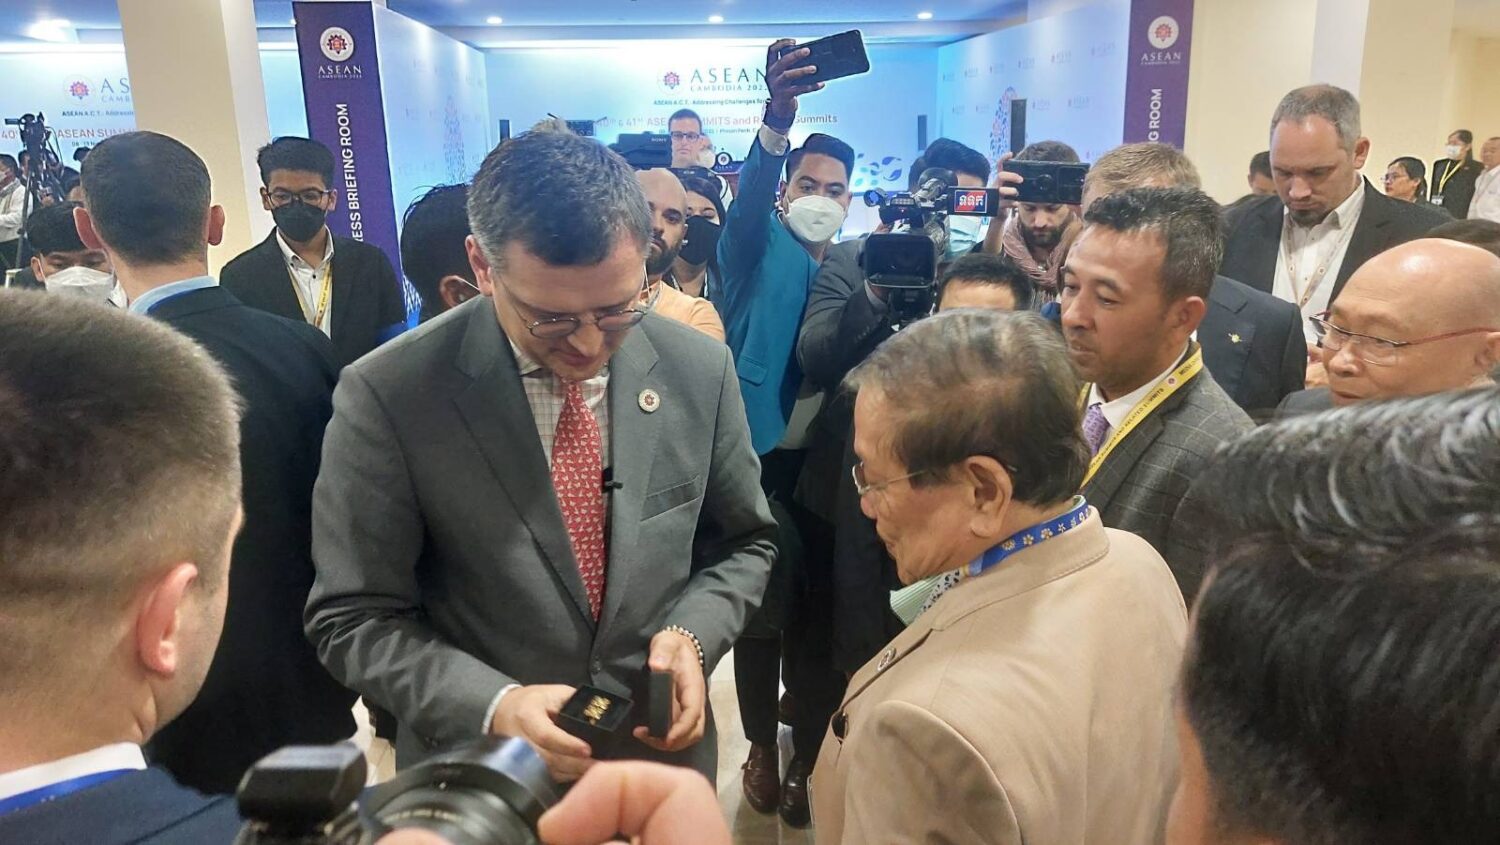 Ukraine Foreign Minister Dmytro Kuleba gifts cufflinks to Information Minister Khieu Kanharith at the Asean Summit in Phnom Penh's Sokha Hotel on November 12, 2022. (Danielle Keeton-Olsen/VOD)